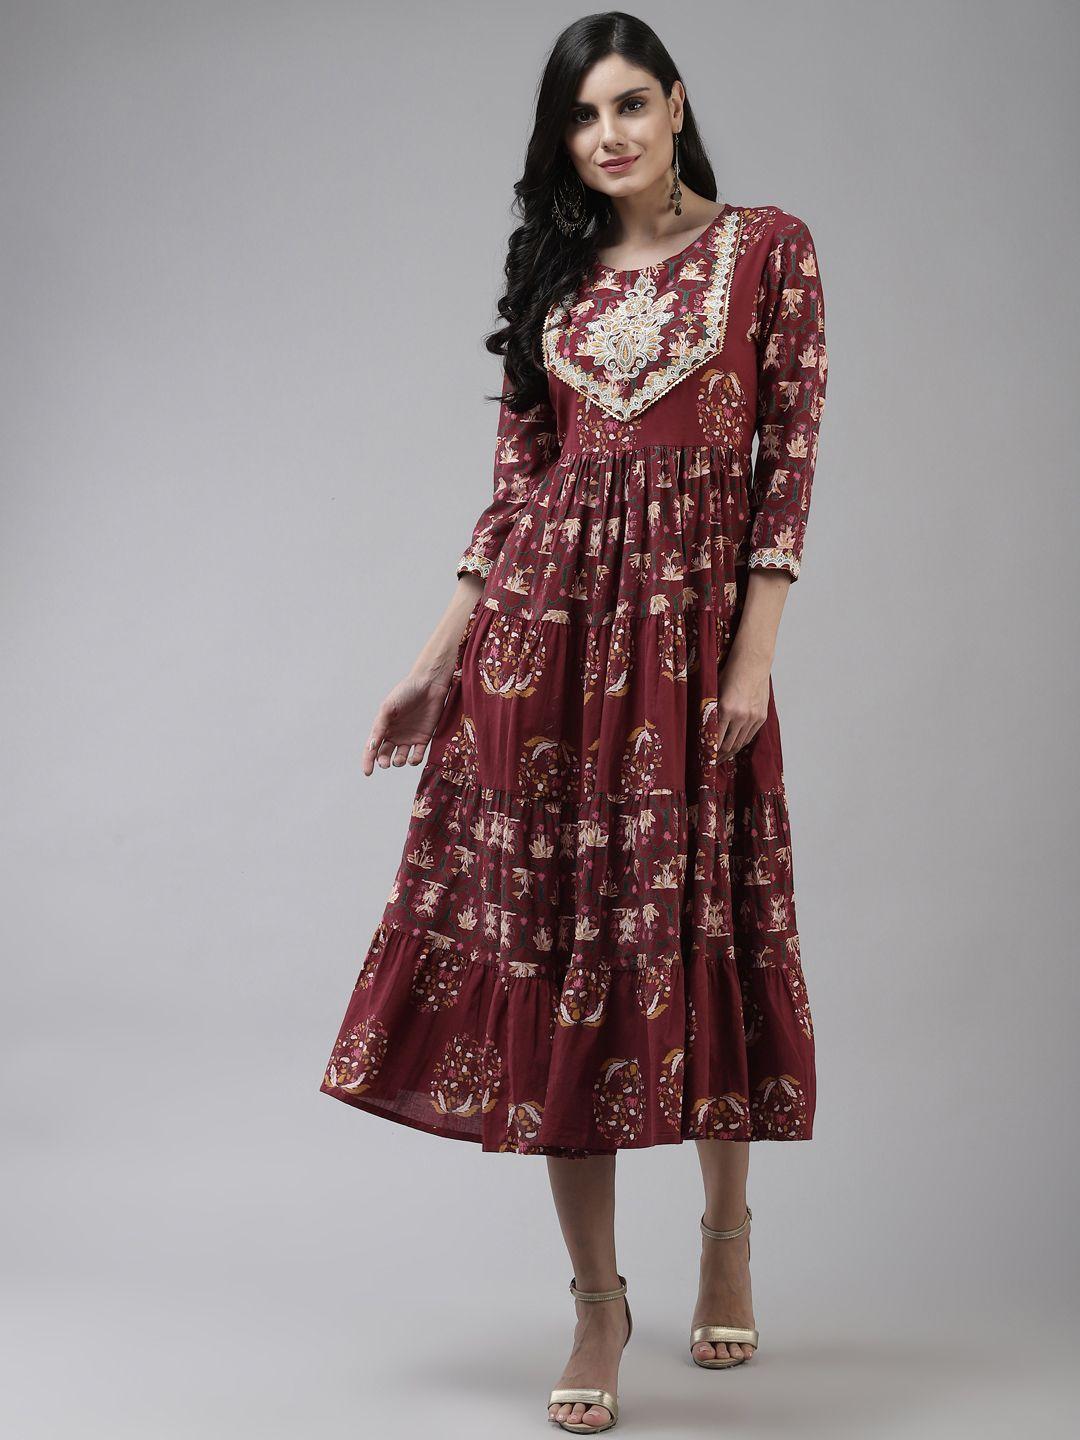 yufta maroon & white ethnic motifs zari embroidered detail cotton ethnic midi dress